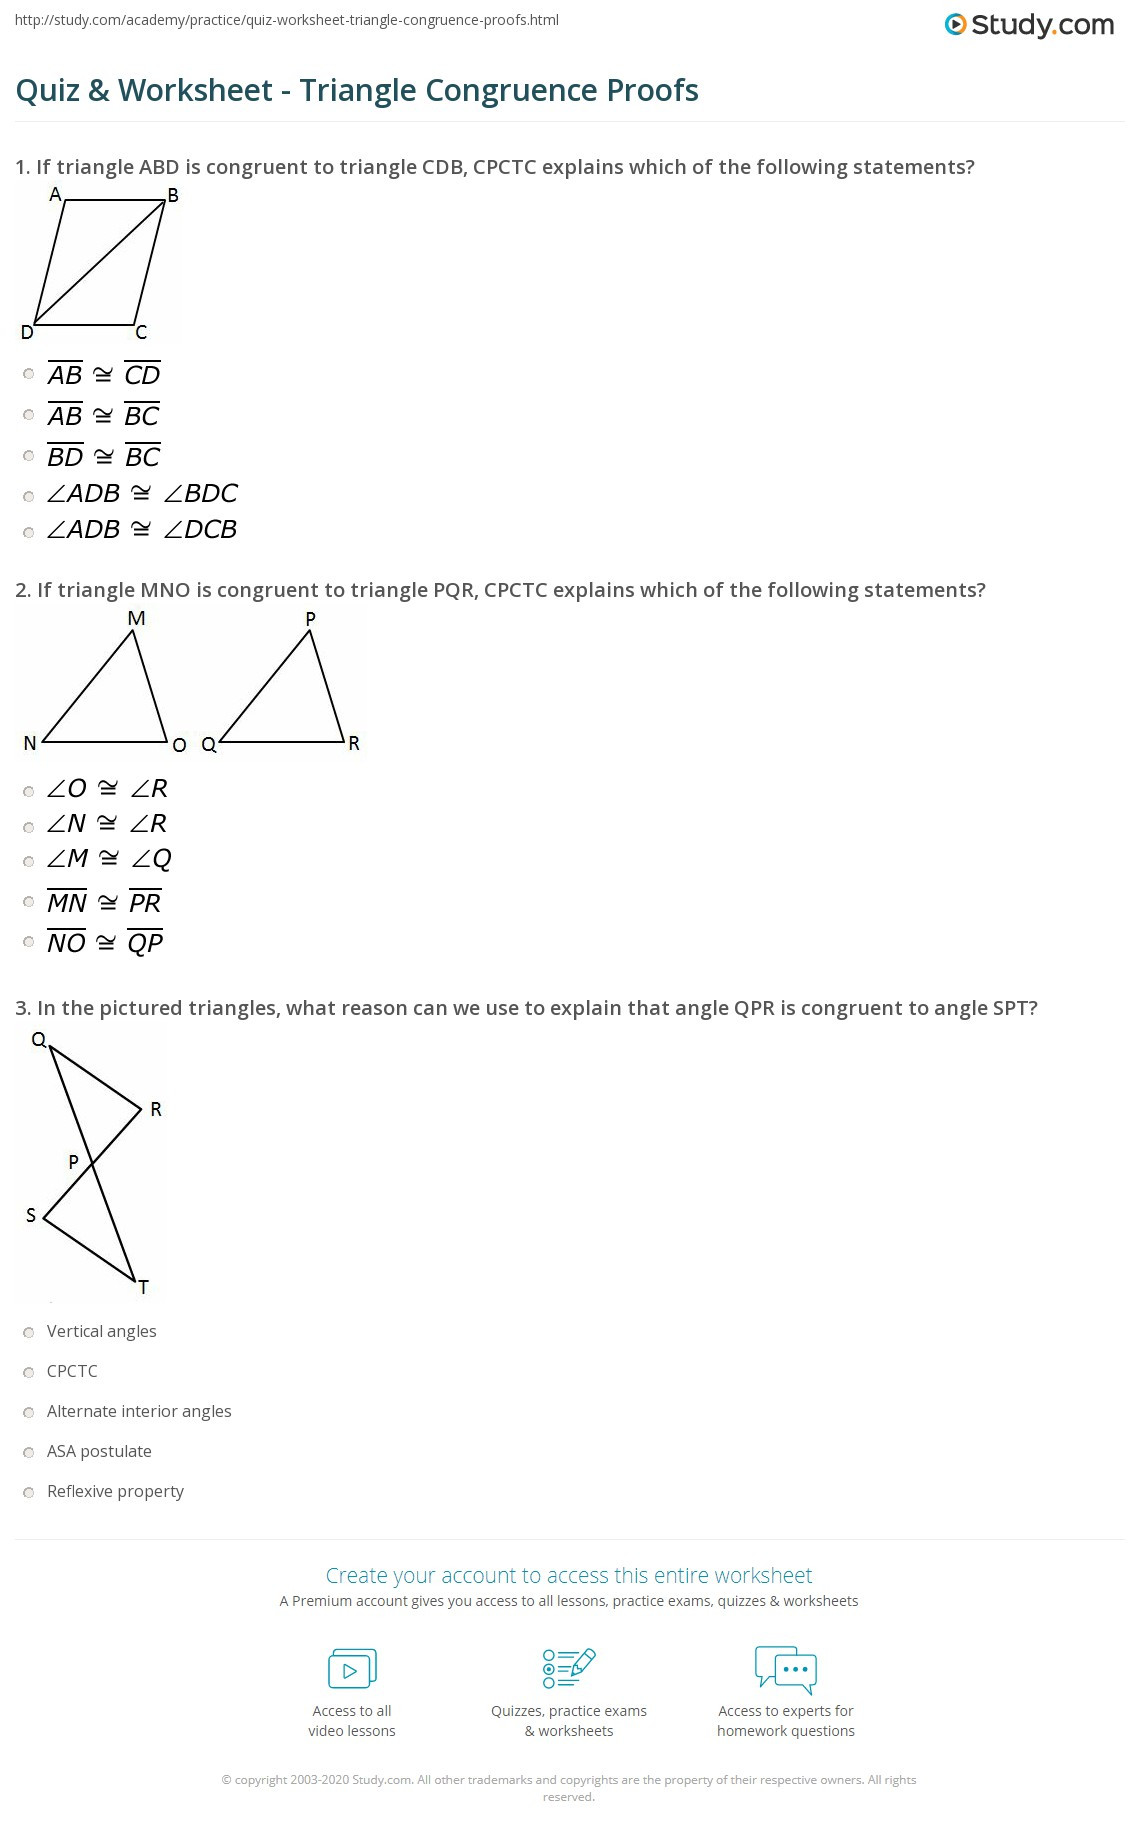 Triangle Congruence Worksheet Answer Key Quiz &amp; Worksheet Triangle Congruence Proofs